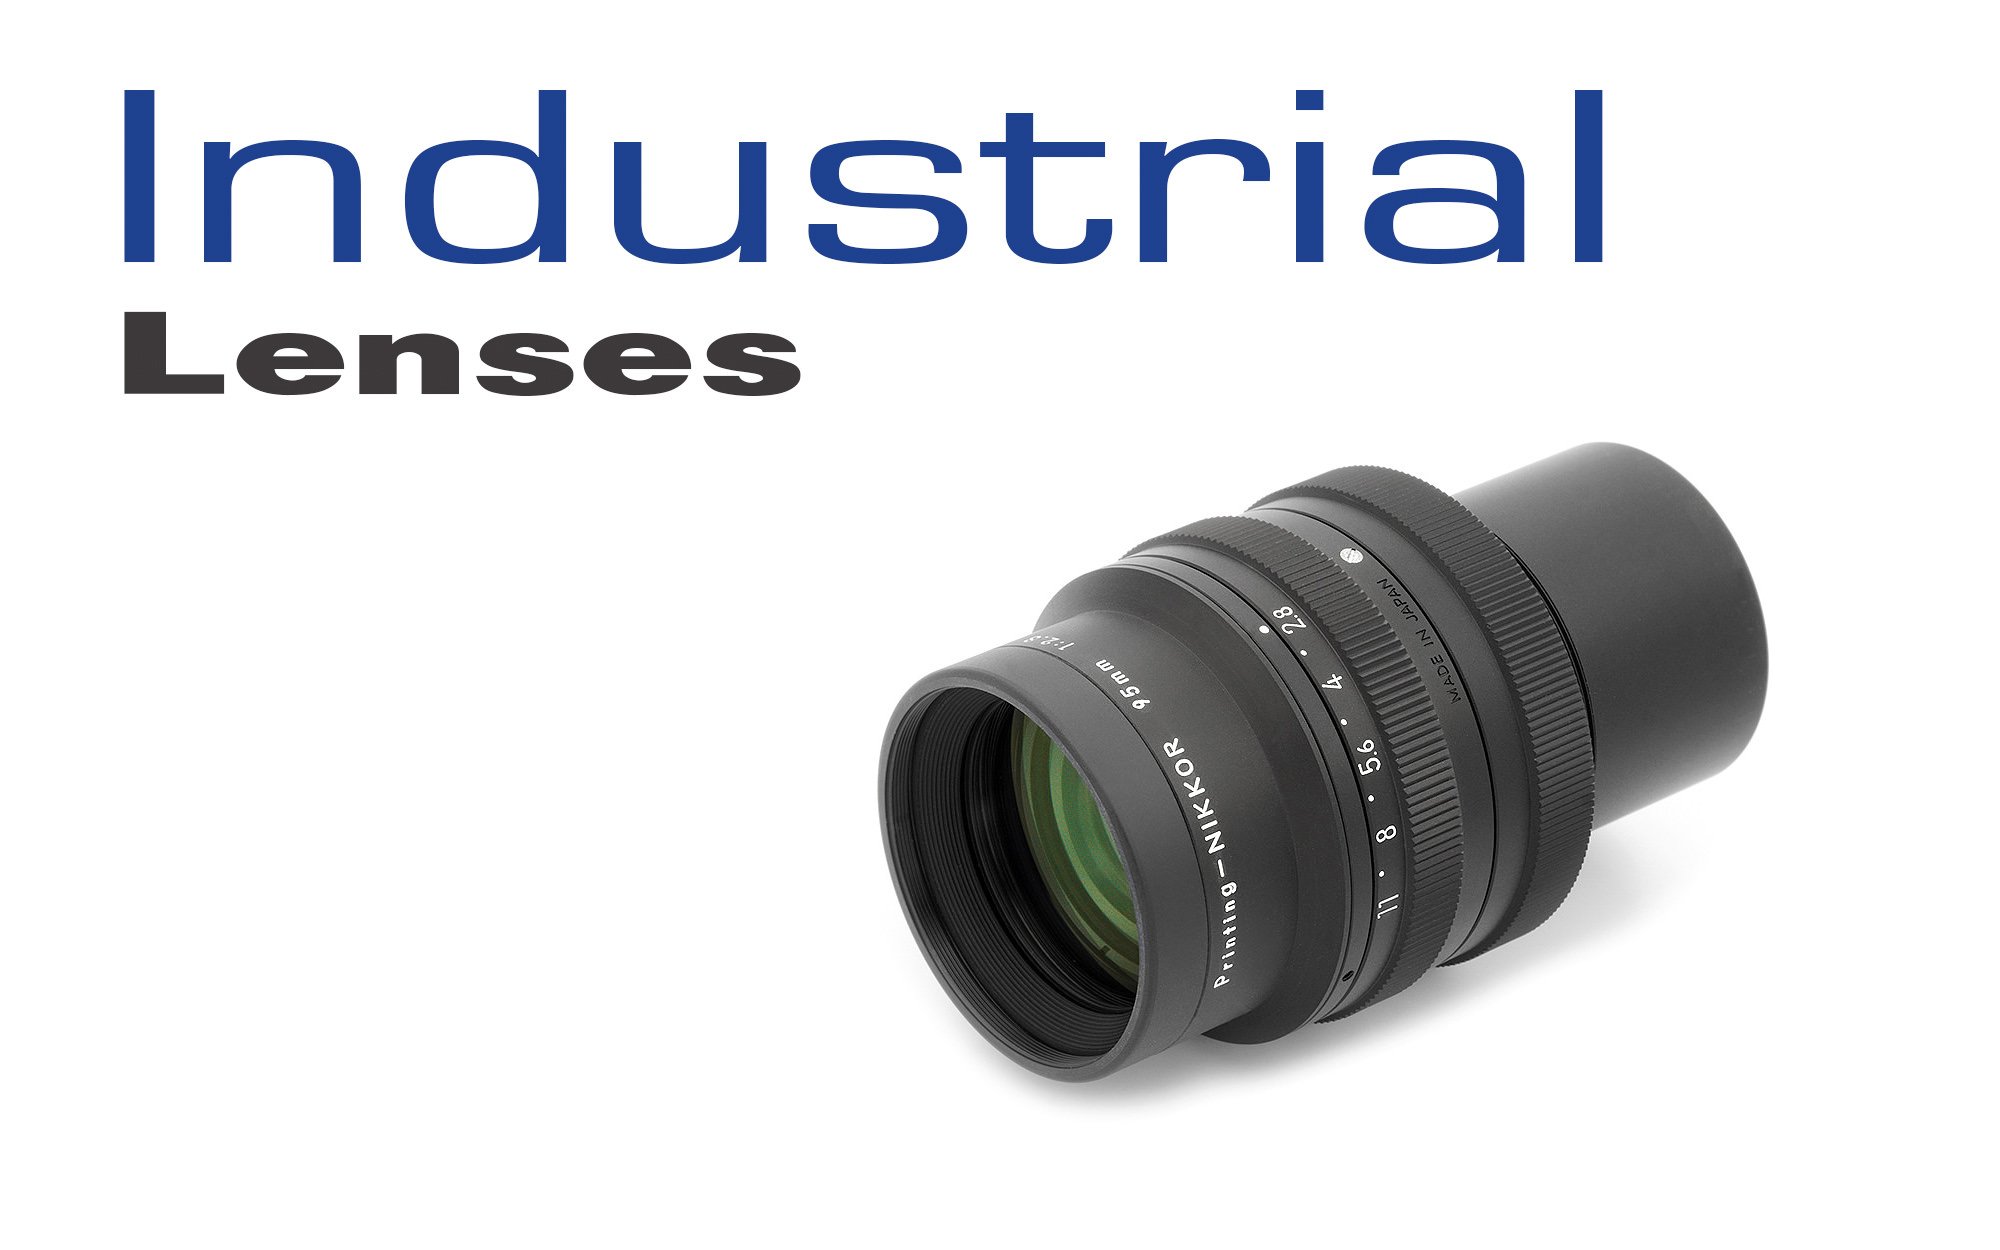 Industrial Lenses